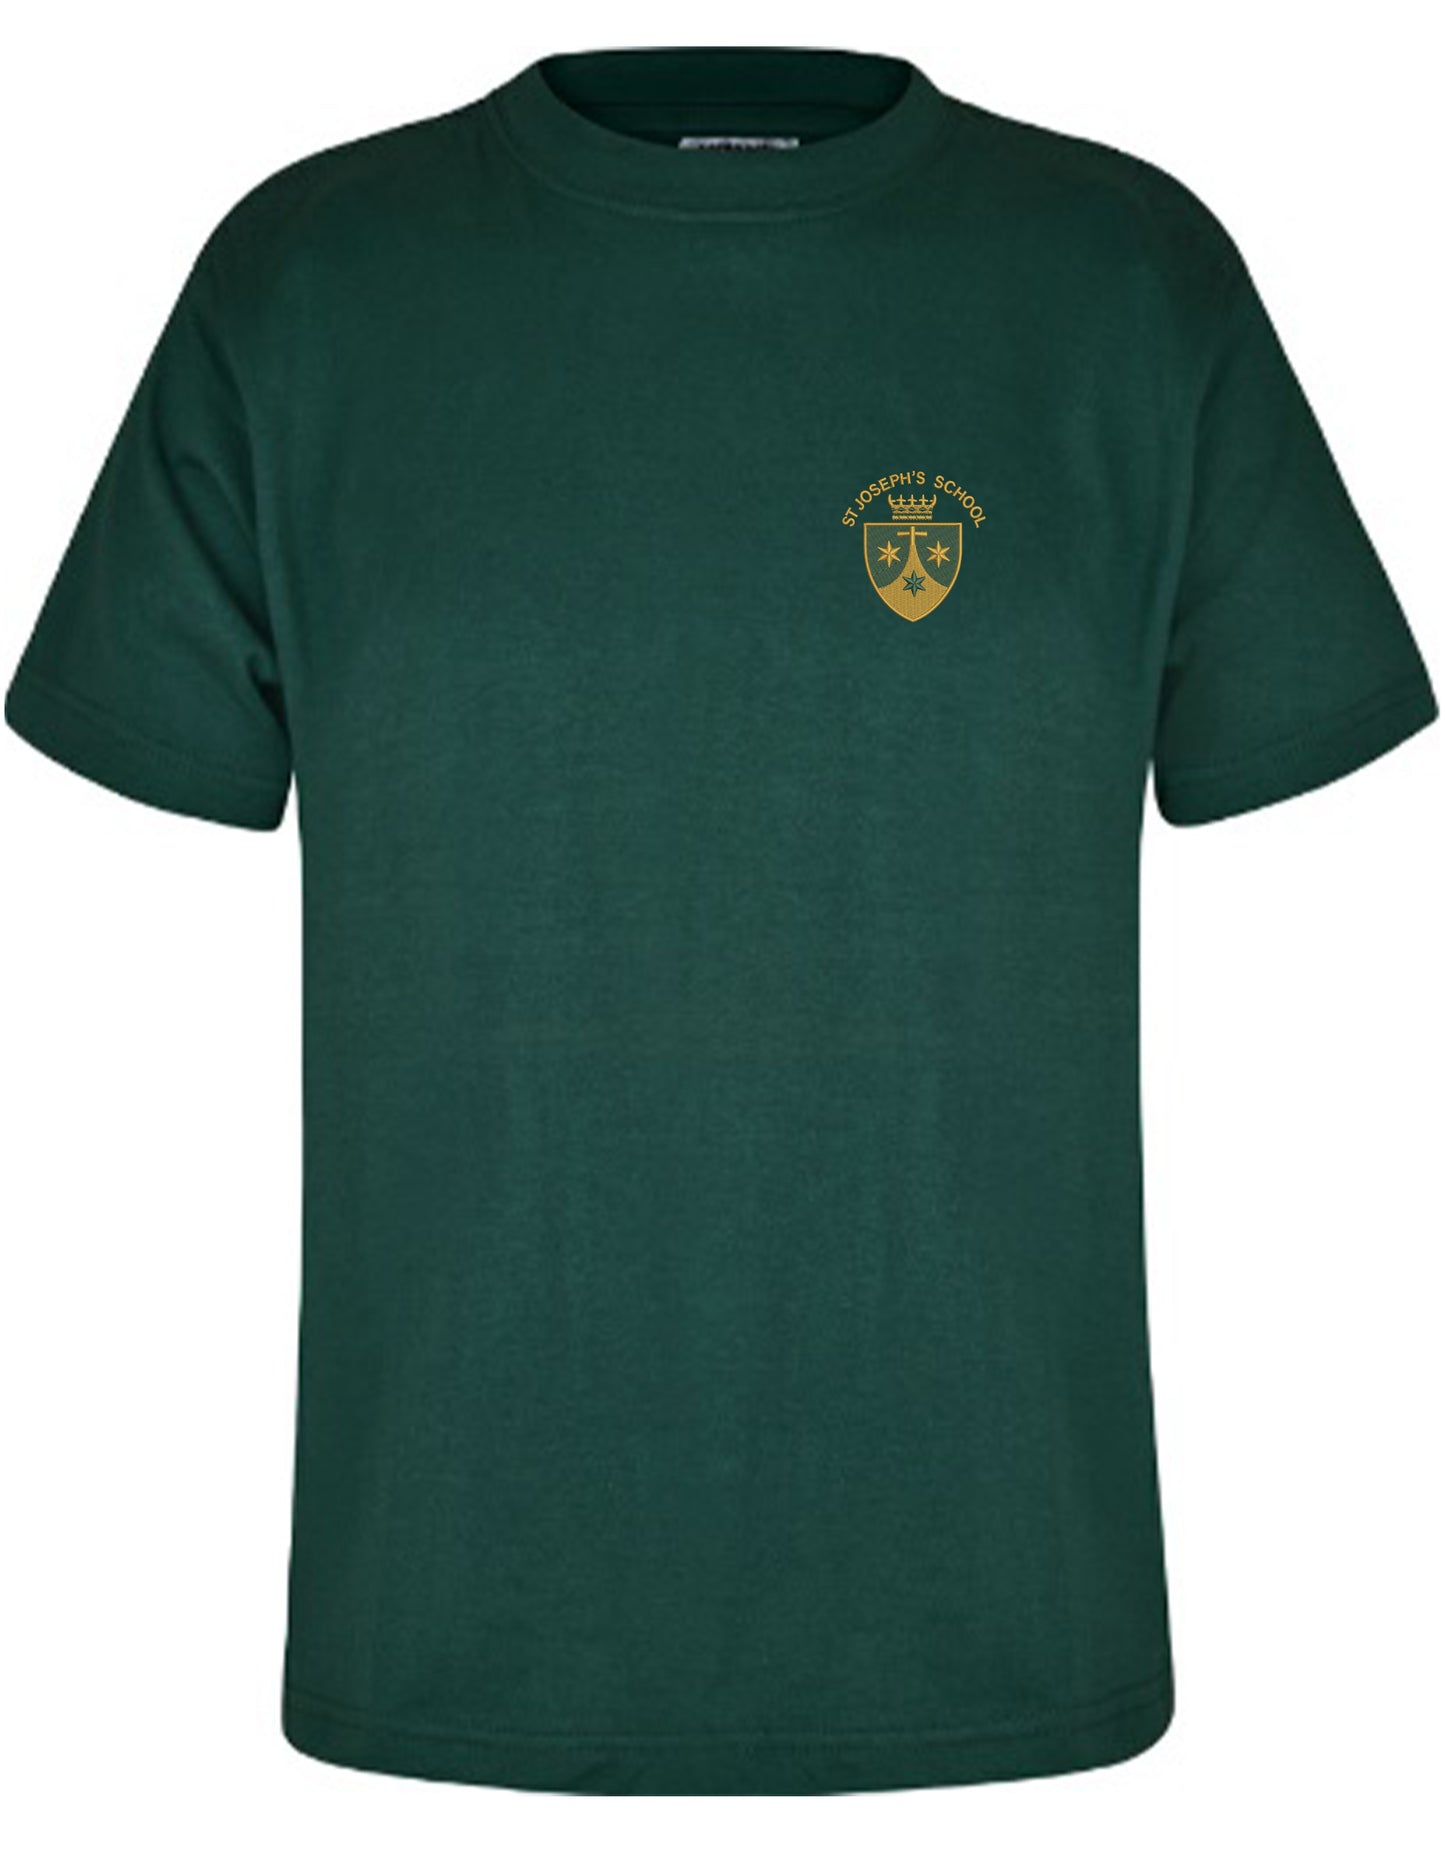 St Joseph's Catholic Primary School - Unisex Cotton T-Shirt - Bottle Green - School Uniform Shop